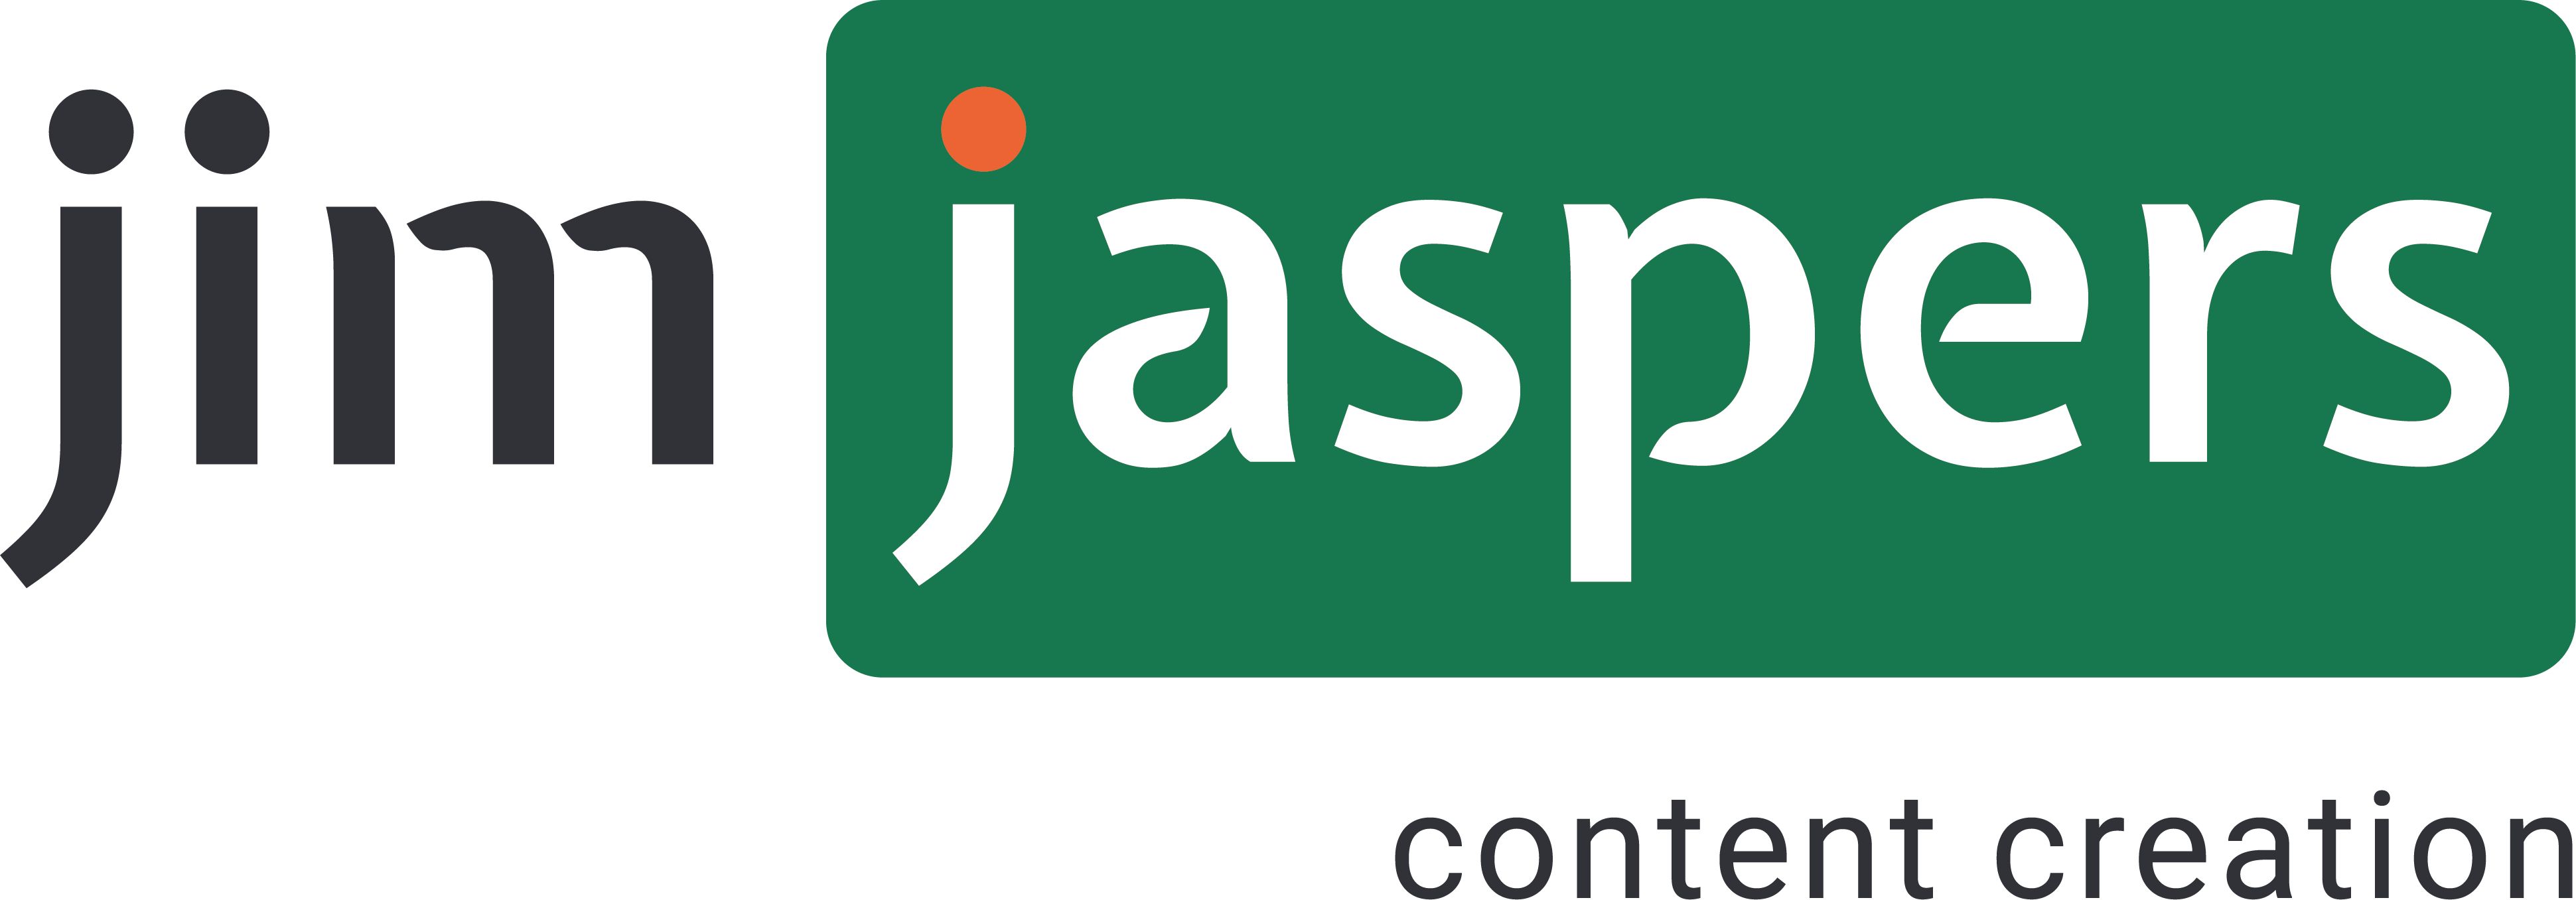 Jim Jaspers content creation